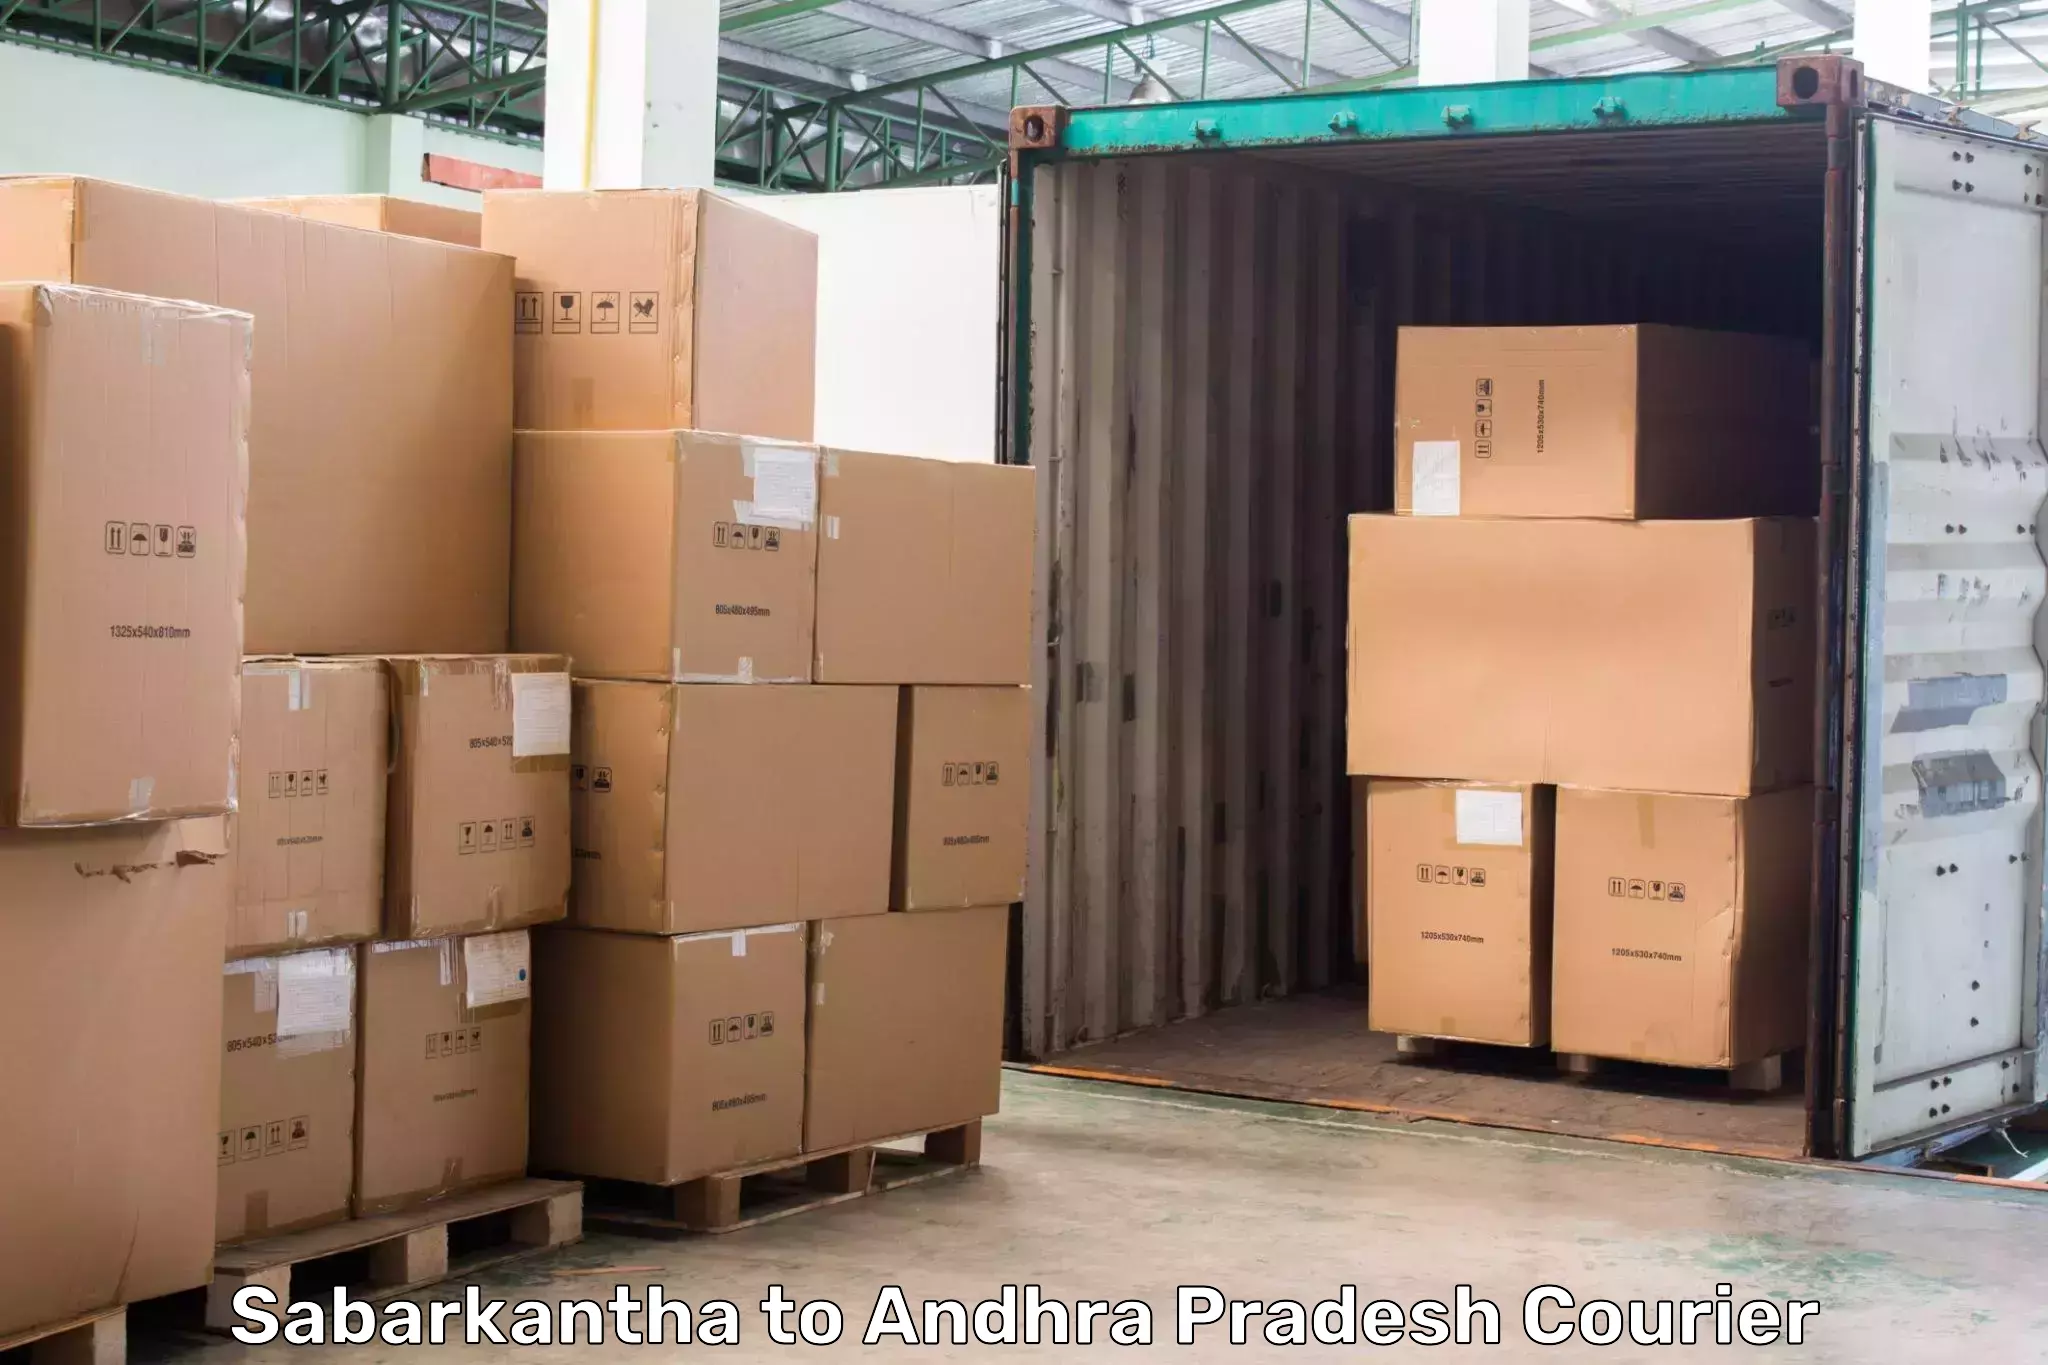 Courier service efficiency Sabarkantha to Vijayawada